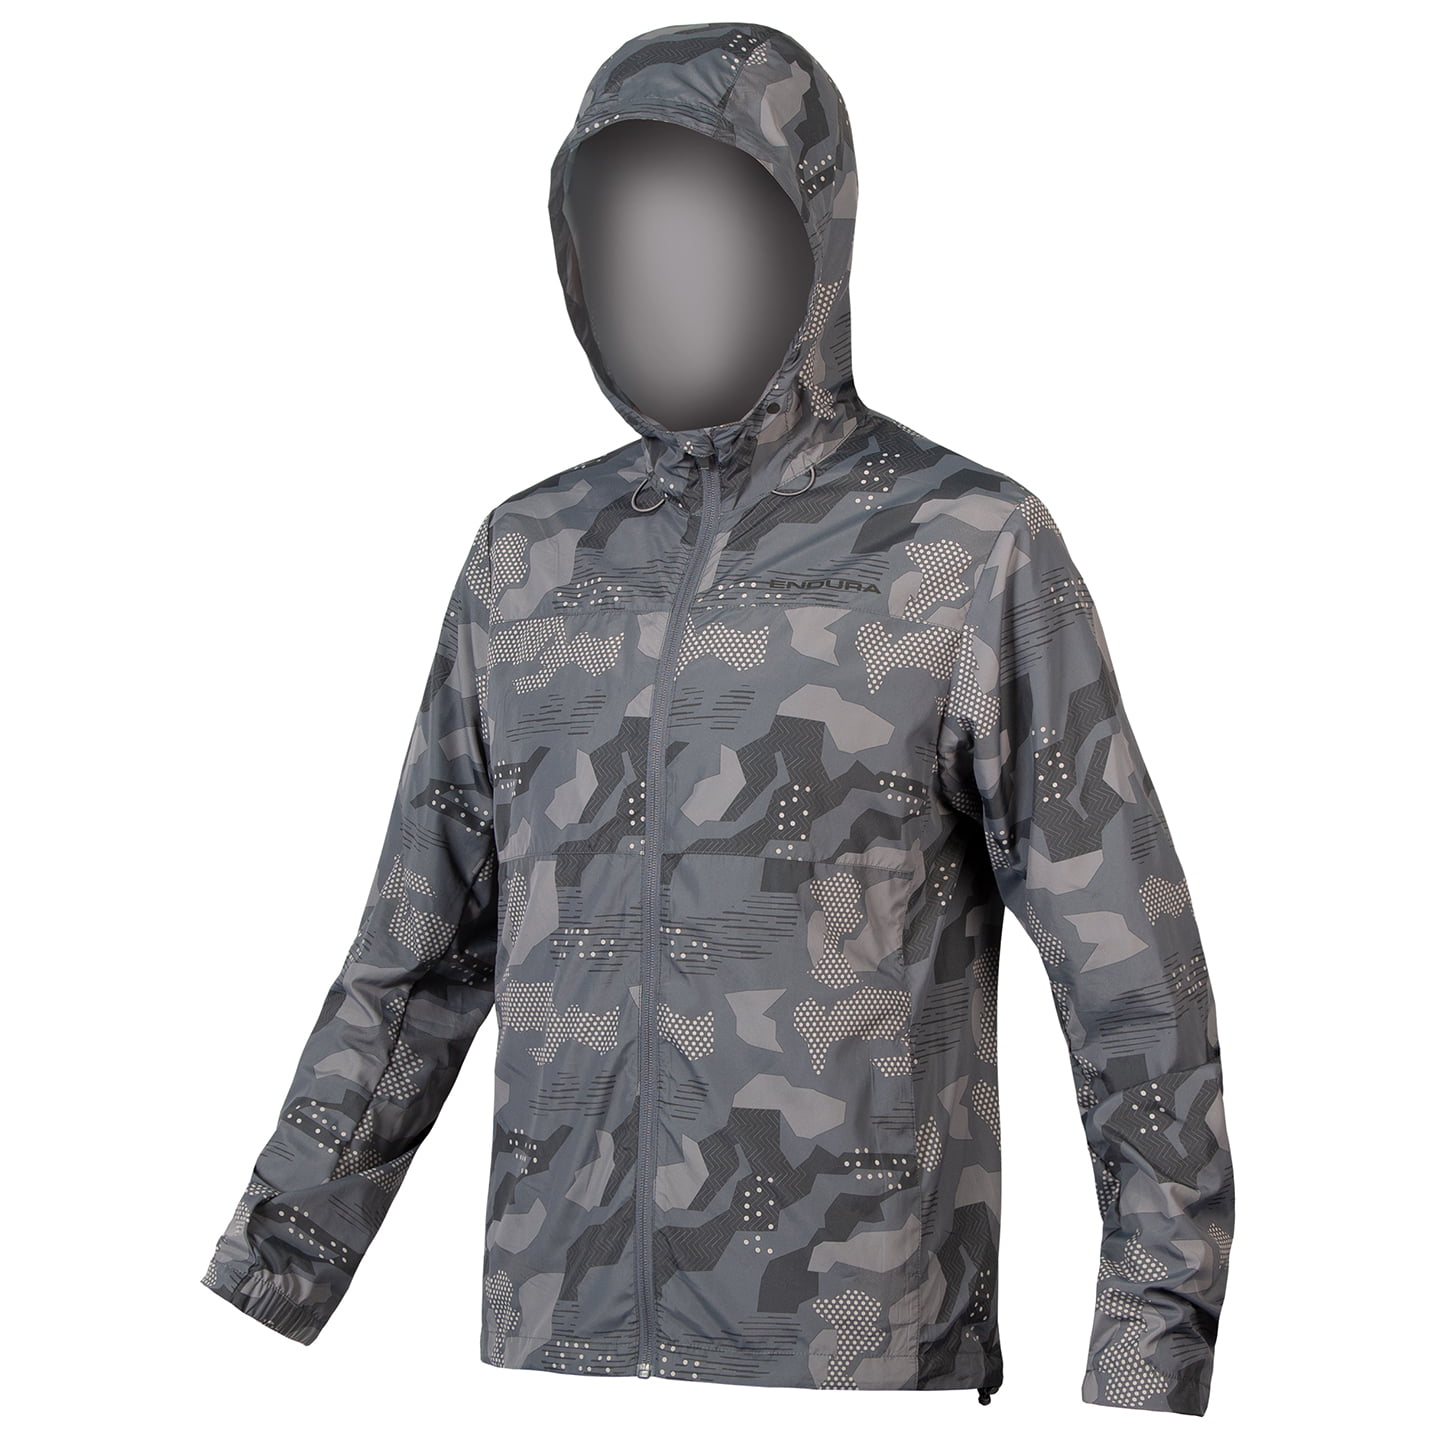 ENDURA Hummvee Wind Jacket Wind Jacket, for men, size L, Cycle jacket, Cycle clothing